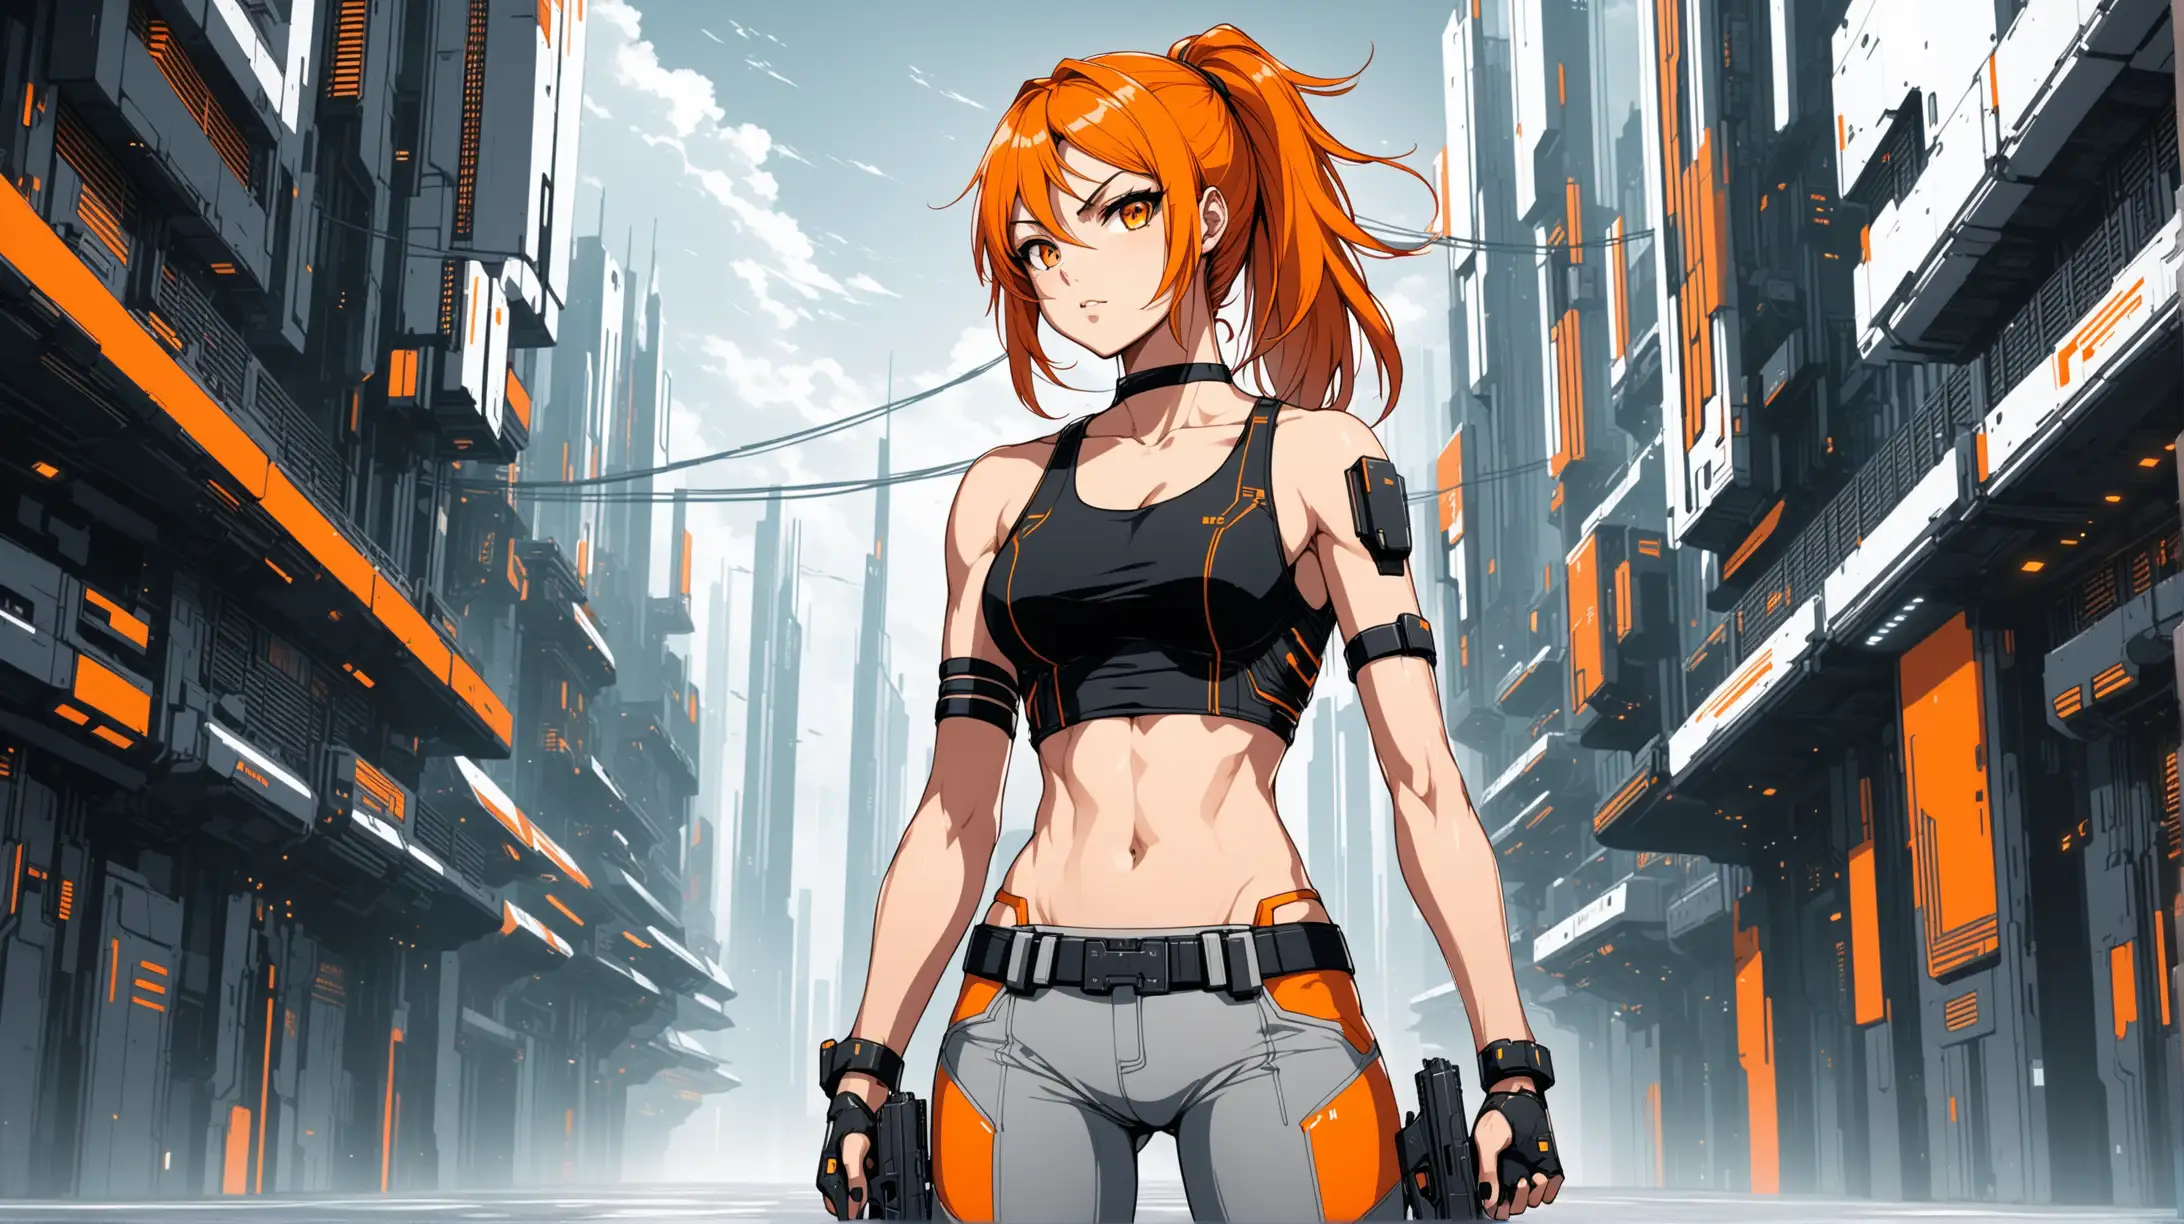 Fierce Anime Cyberpunk Heroine with Handguns in Futuristic City